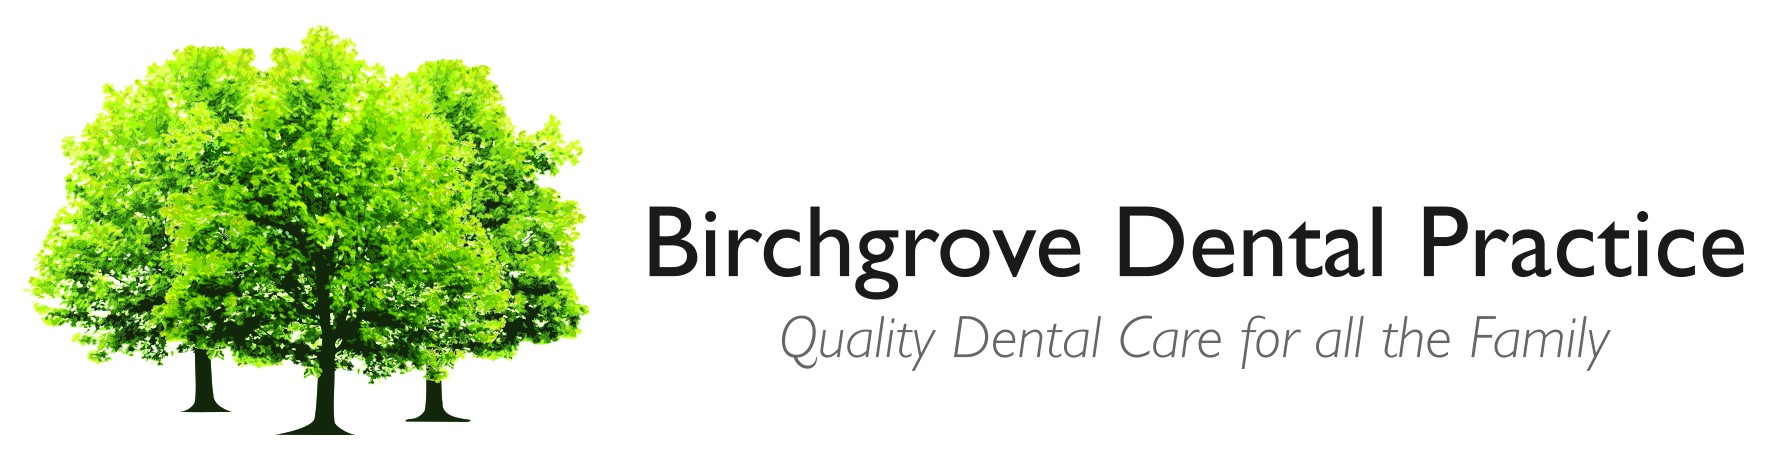 Birchgrove Dental Practice